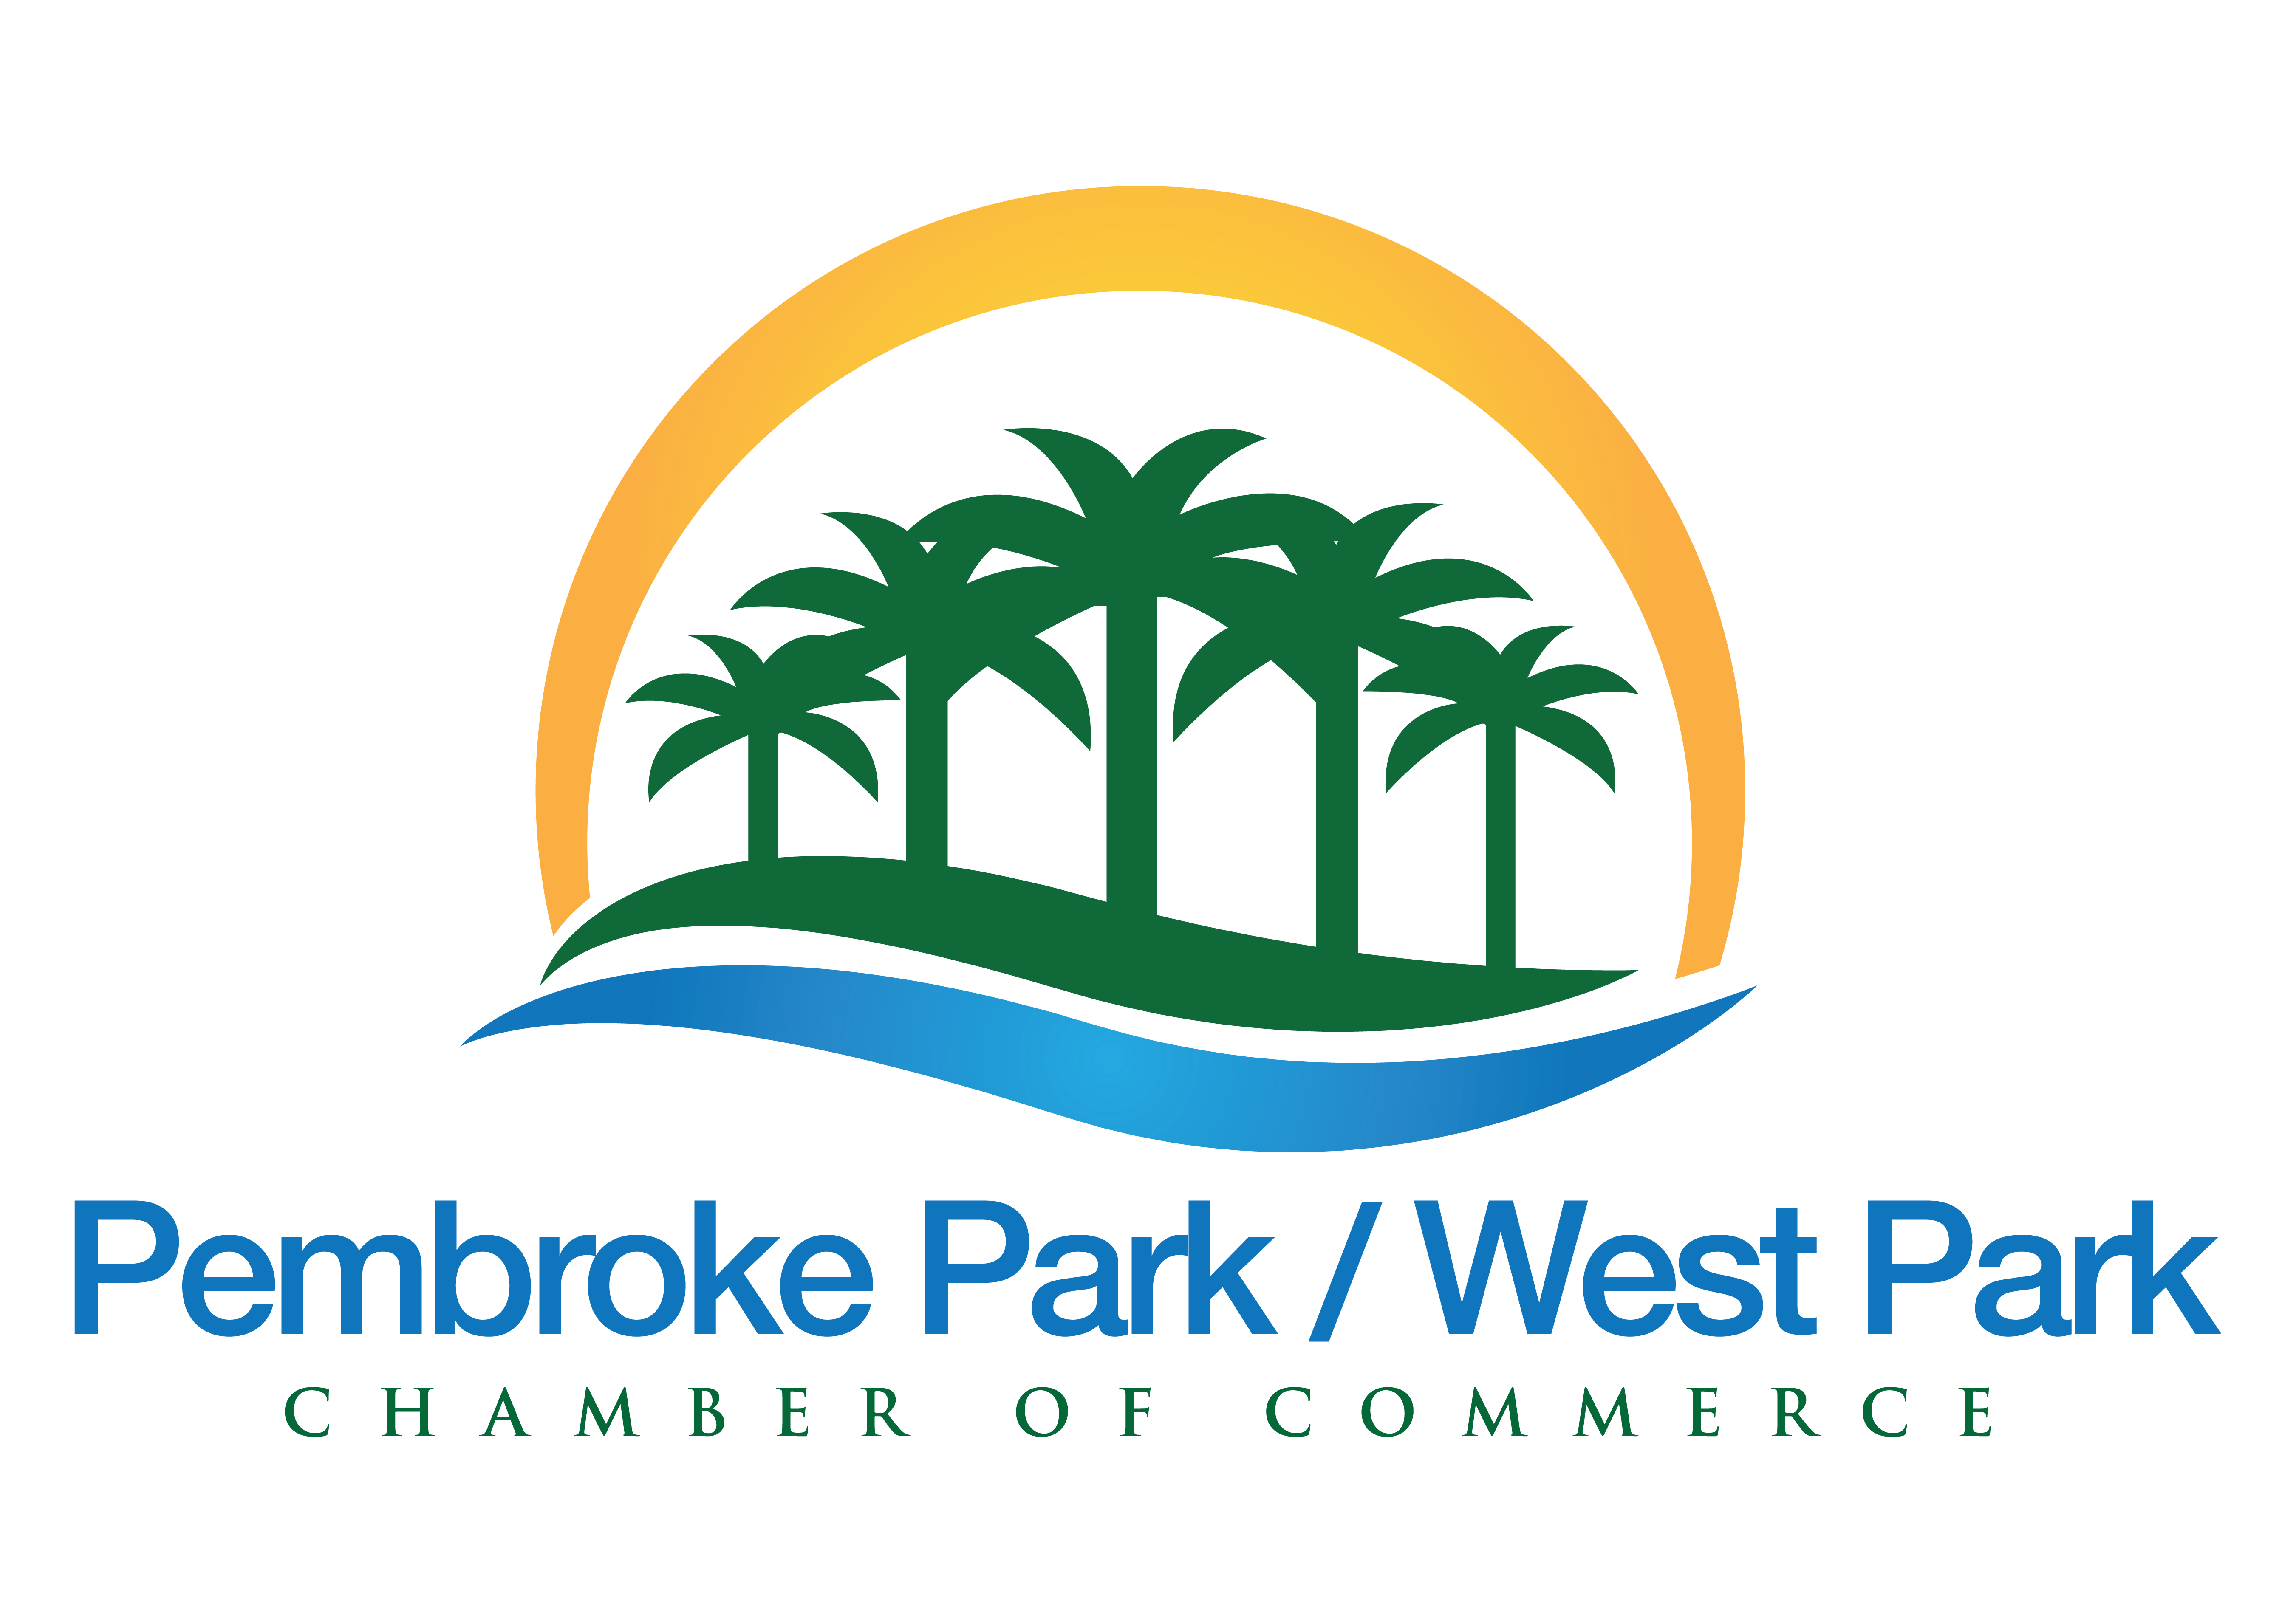 Pembroke Park West Park Chamber of Commerce